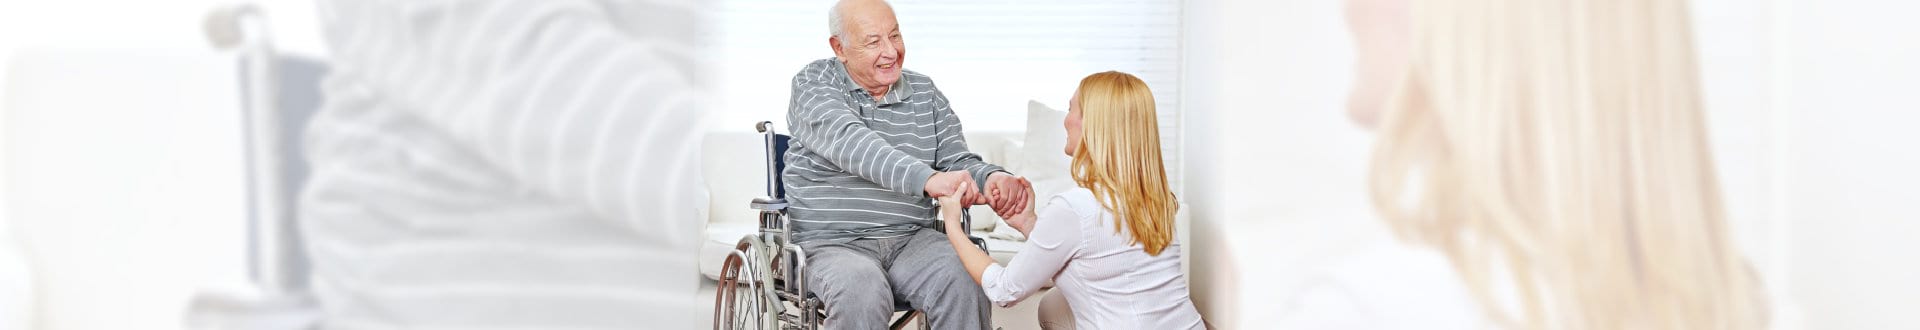 caregiver and senior man holding hands